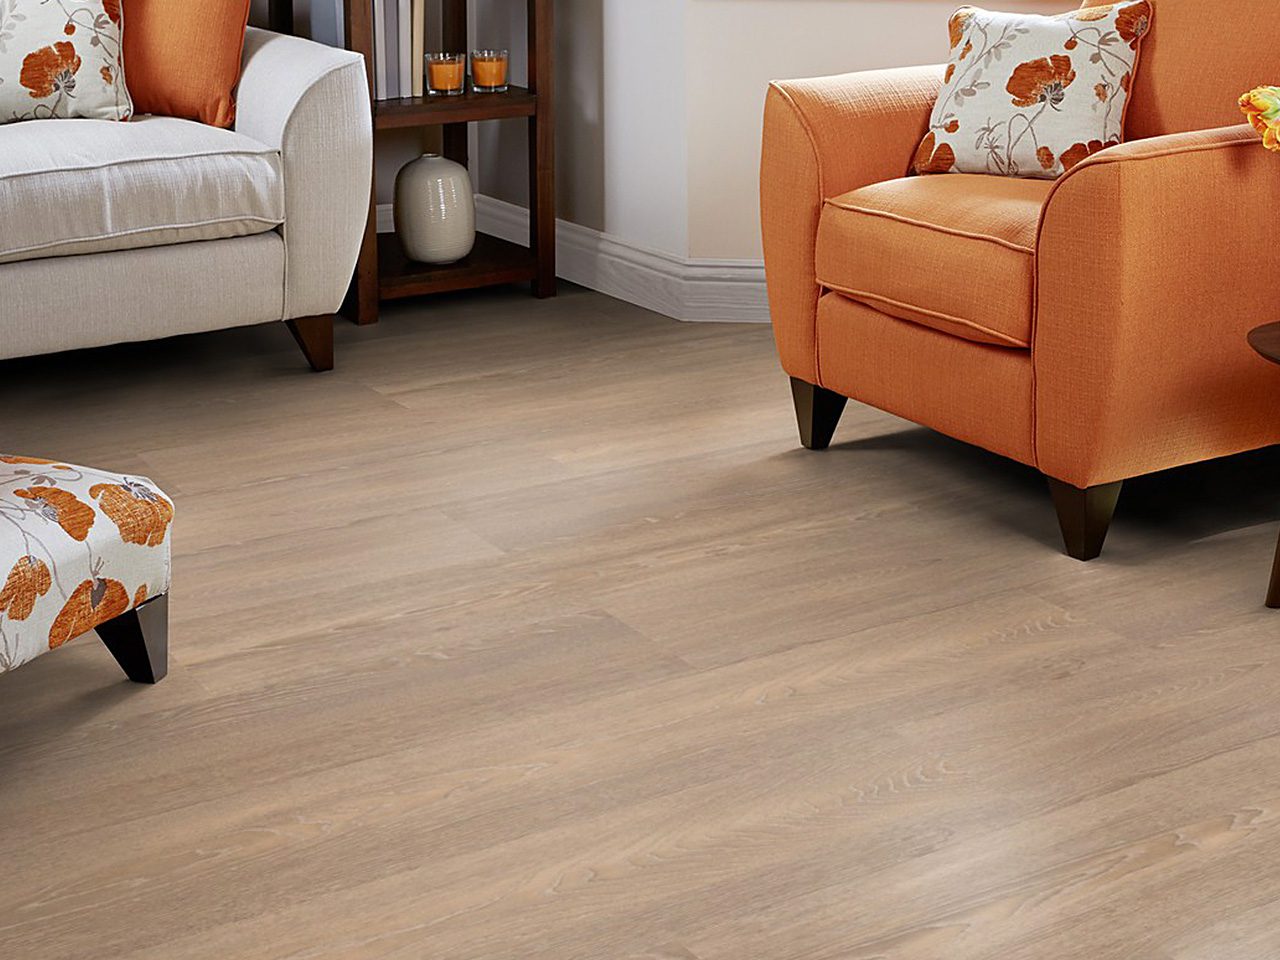 Kardean flooring for living rooms